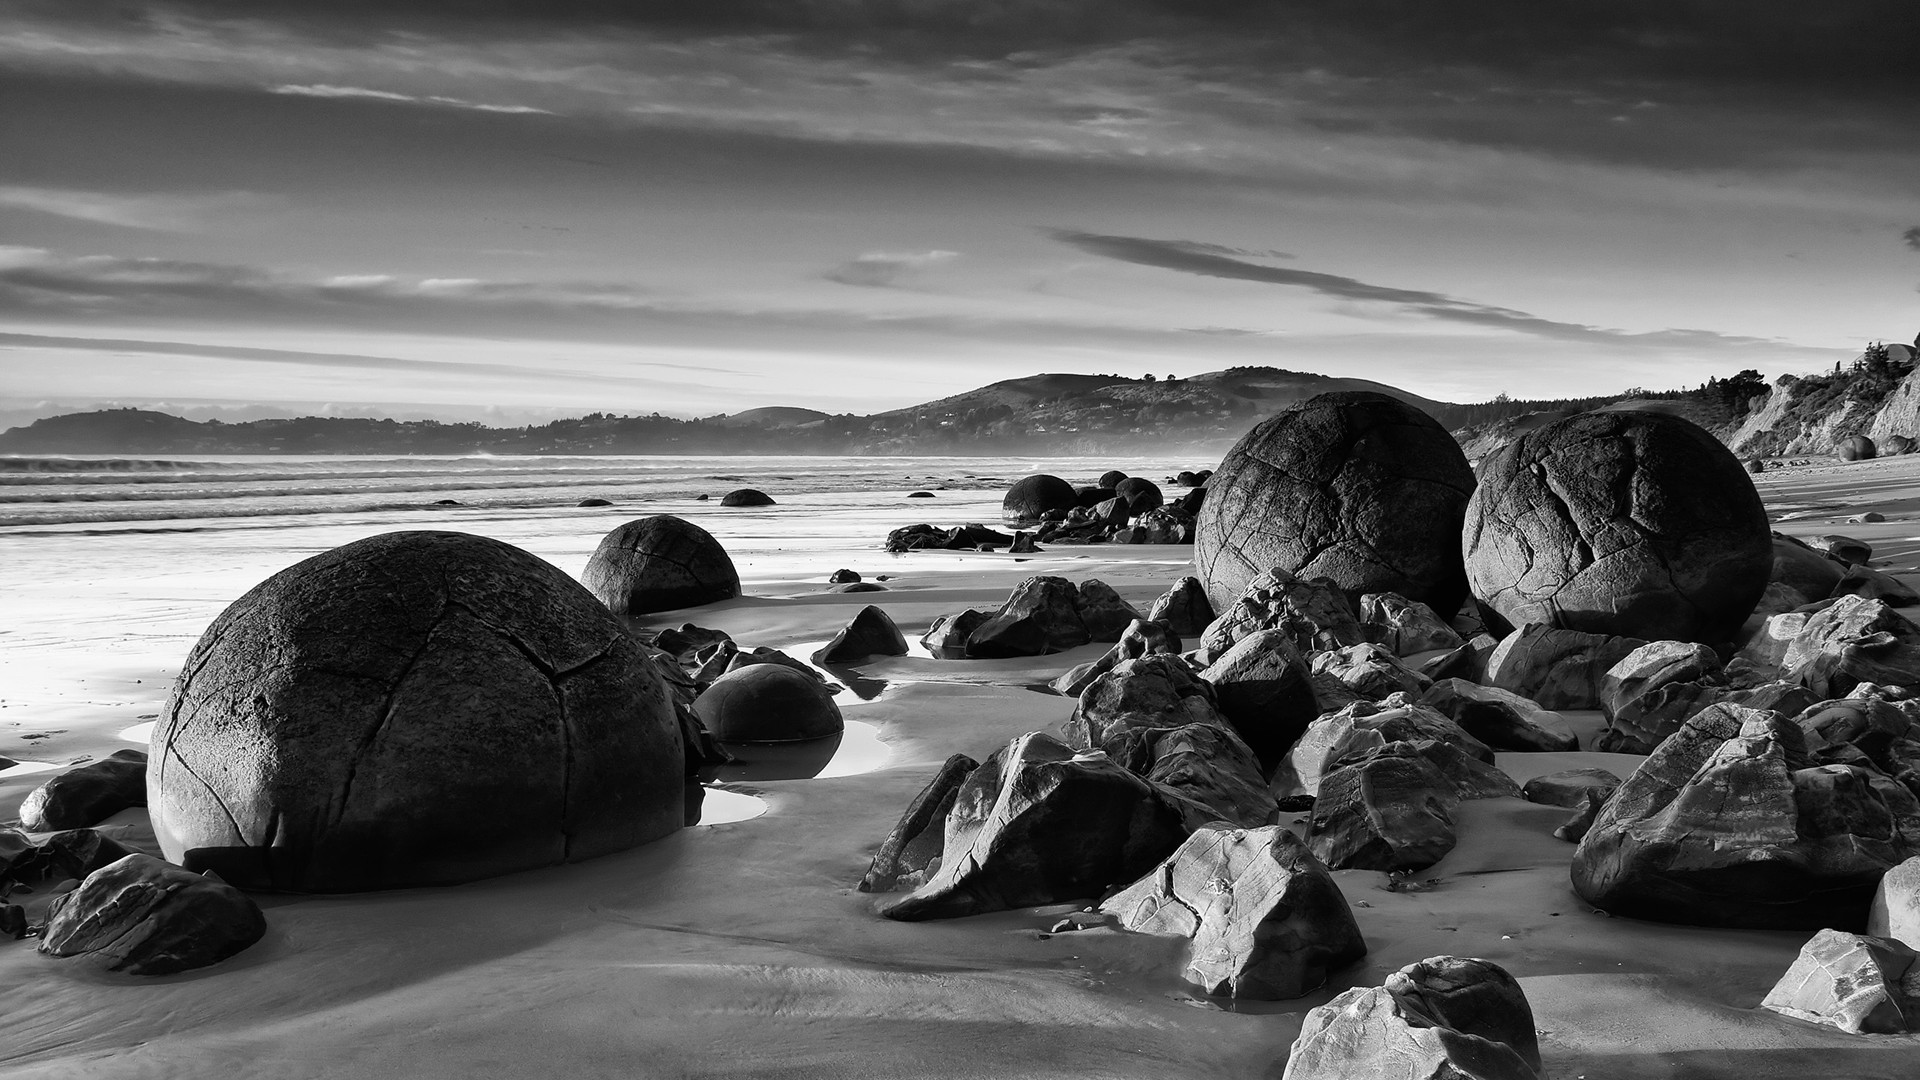 General 1920x1080 nature landscape rocks water New Zealand beach sand coast sea hills clouds trees waves monochrome